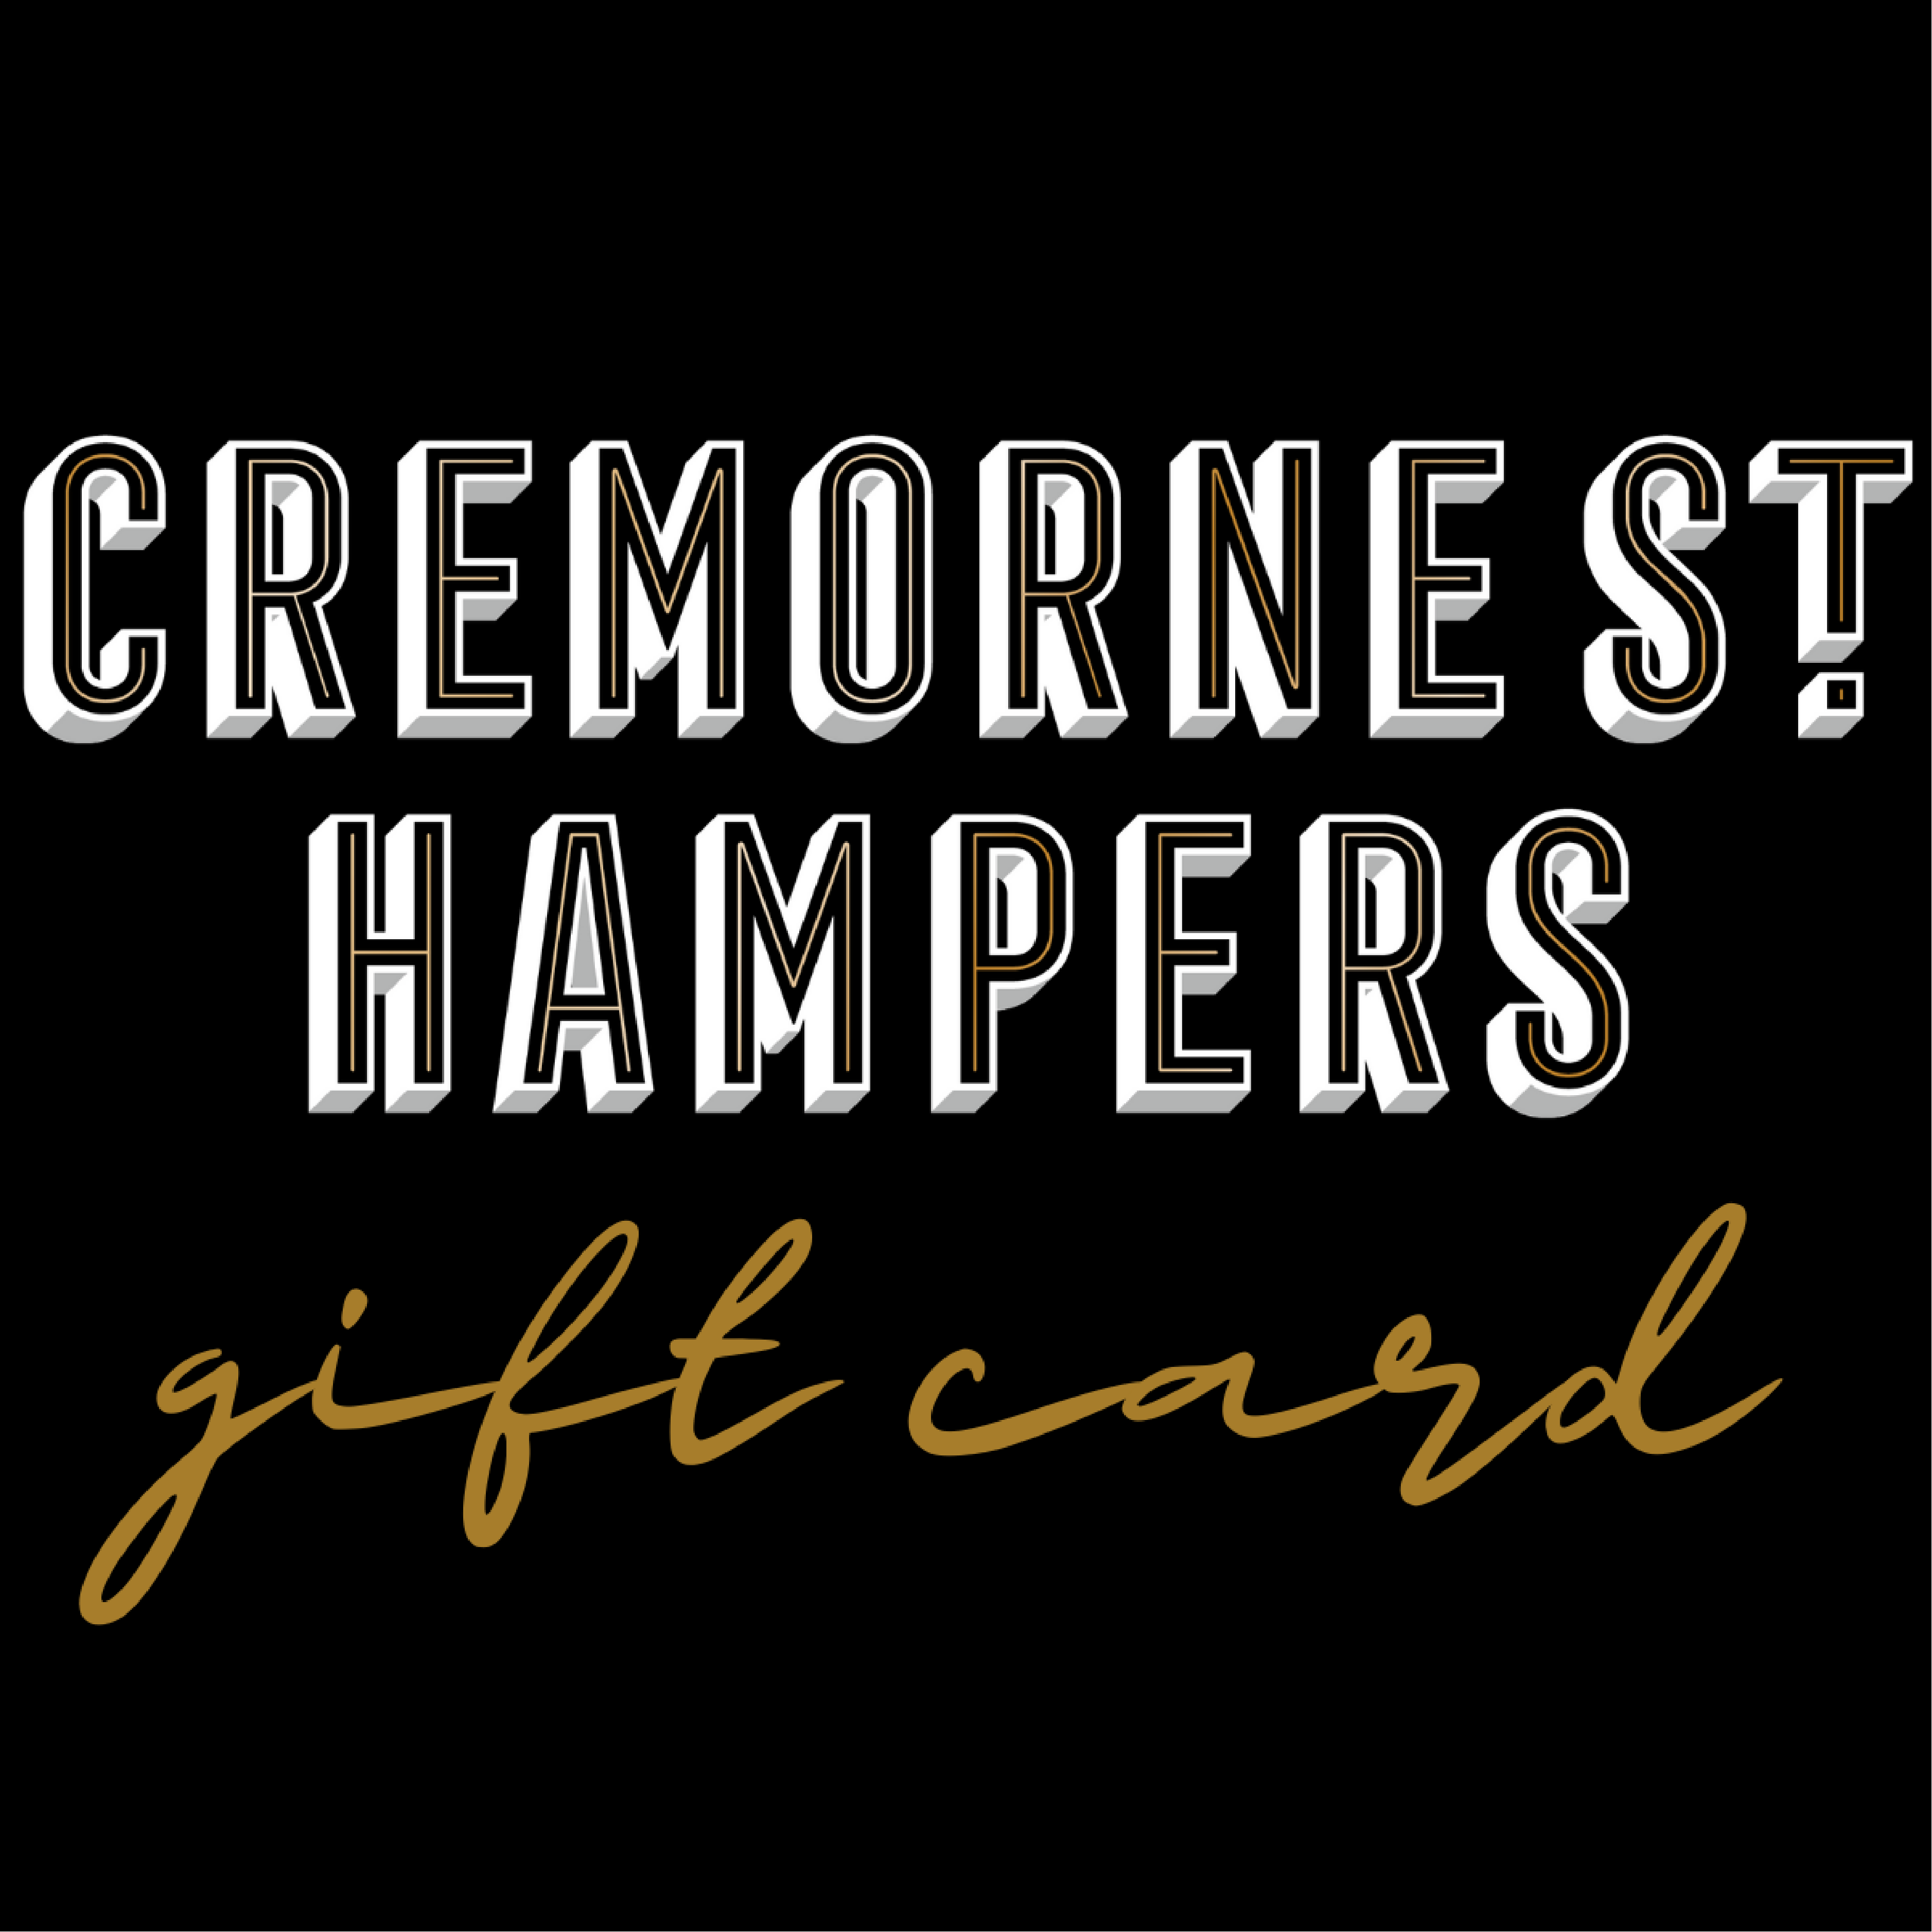 Cremorne Street Hampers Gift Card